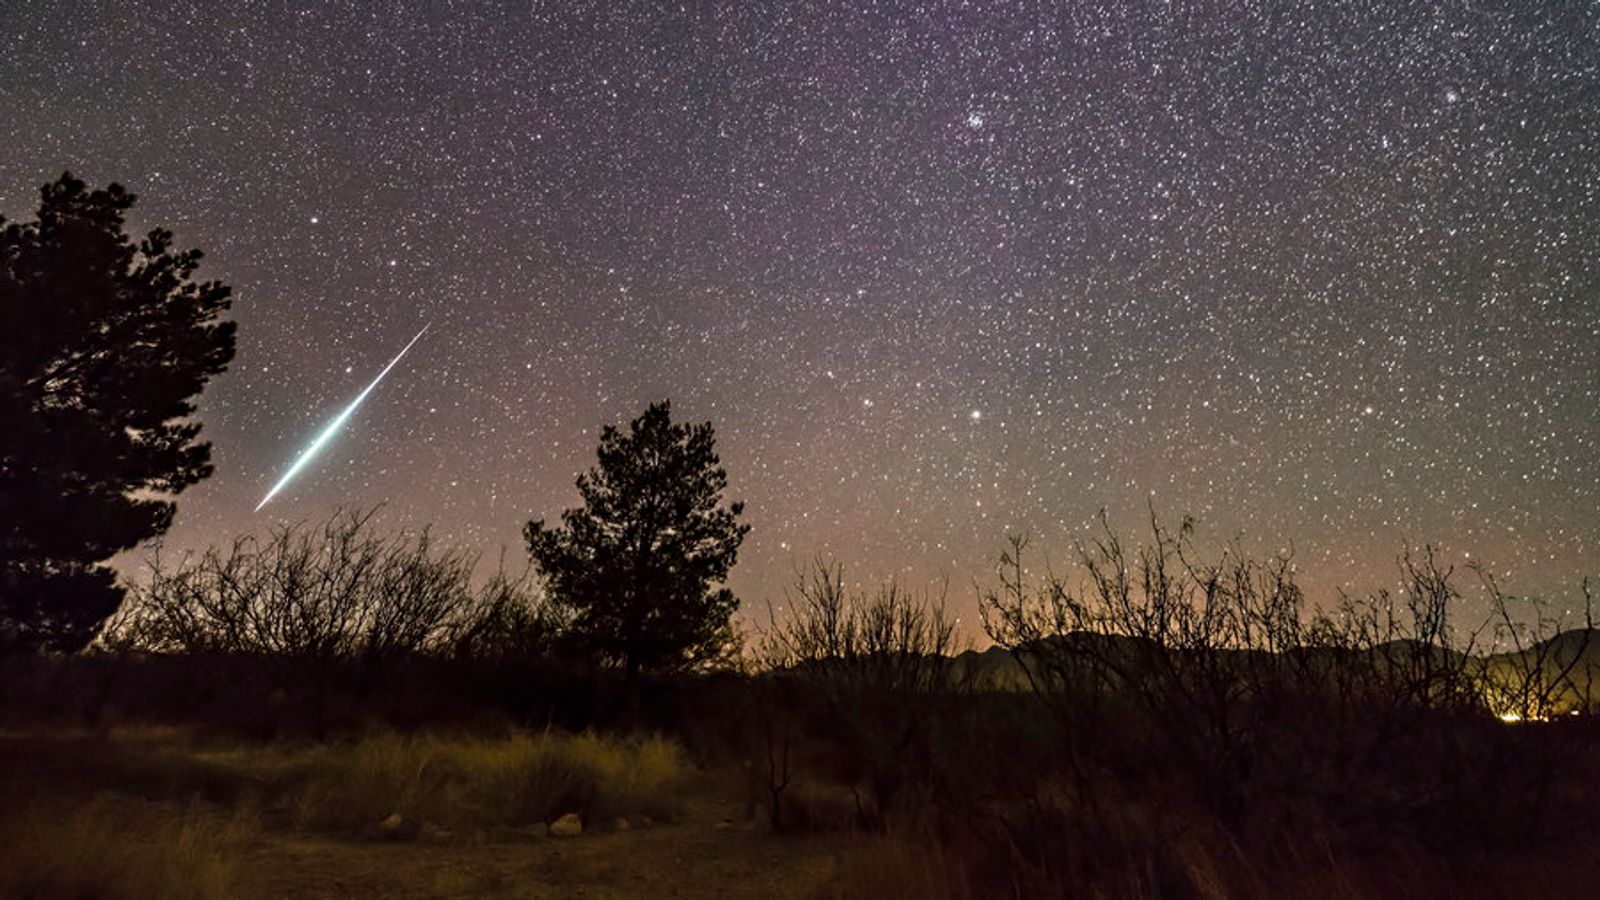 Experience the Eta Aquariid Meteor Shower Peaking This Weekend The